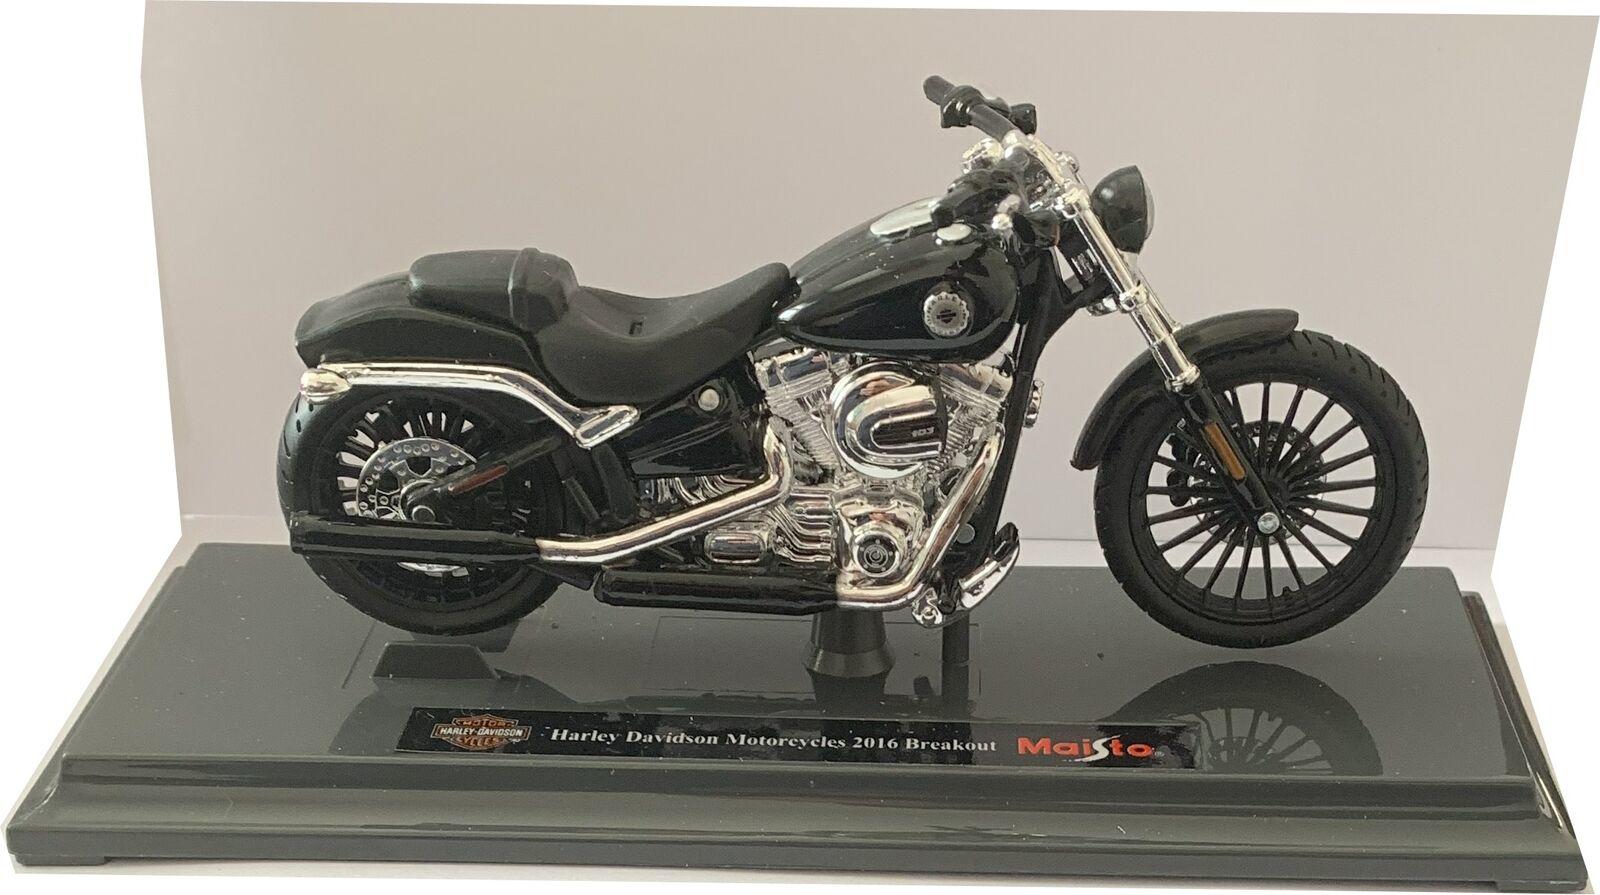 Harley Davidson 2016 Breakout in black 1:18 scale model from Maisto